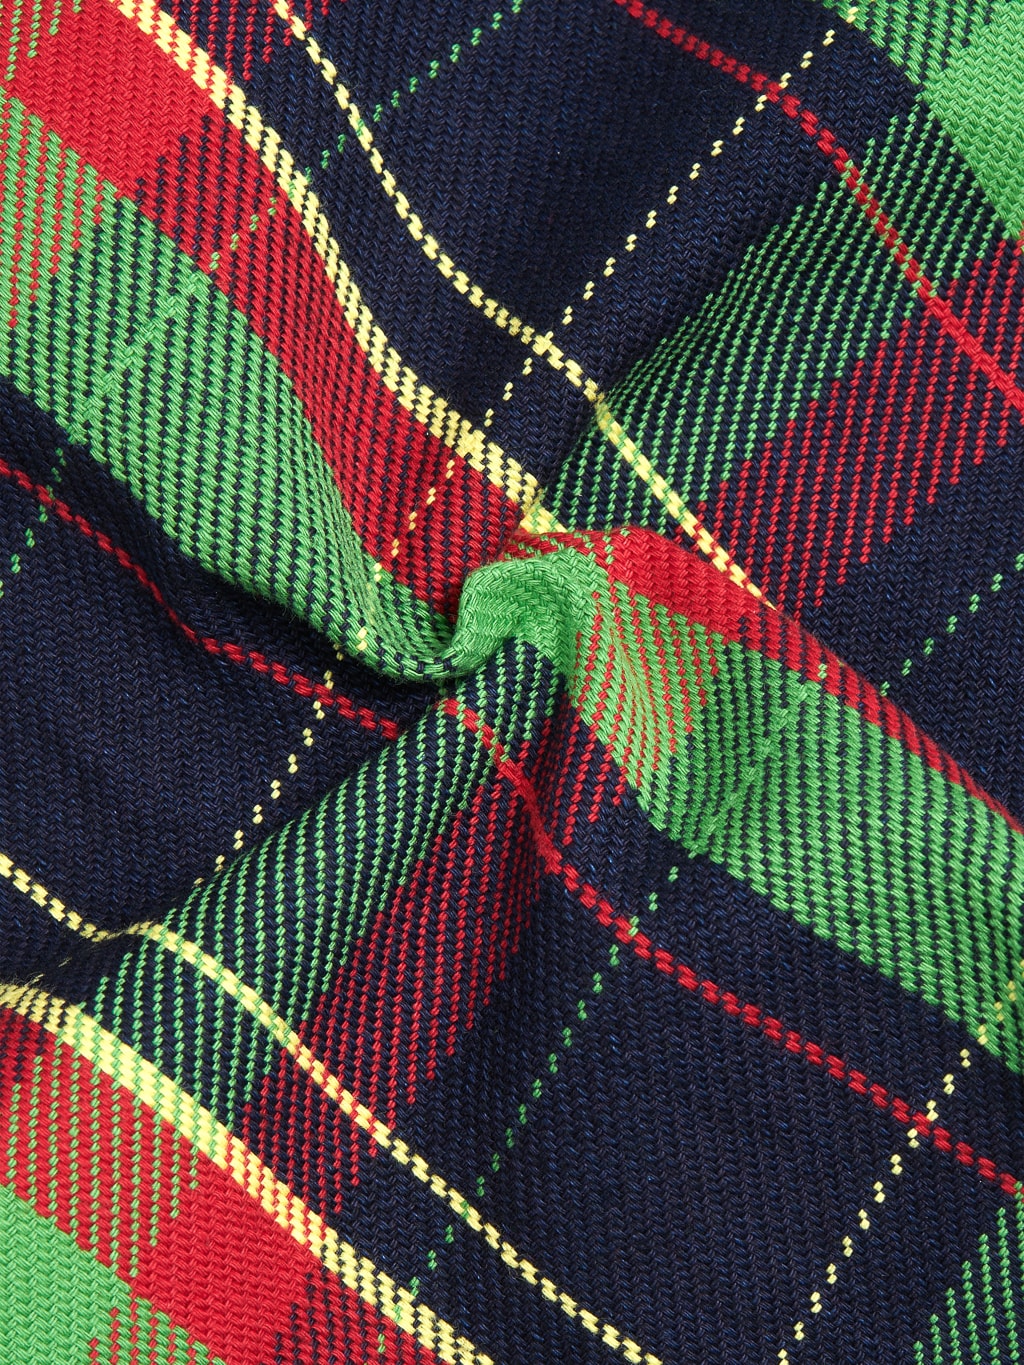 Samurai Jeans SIN23-01W Rope Dyed Indigo Heavy Flannel Shirt Green